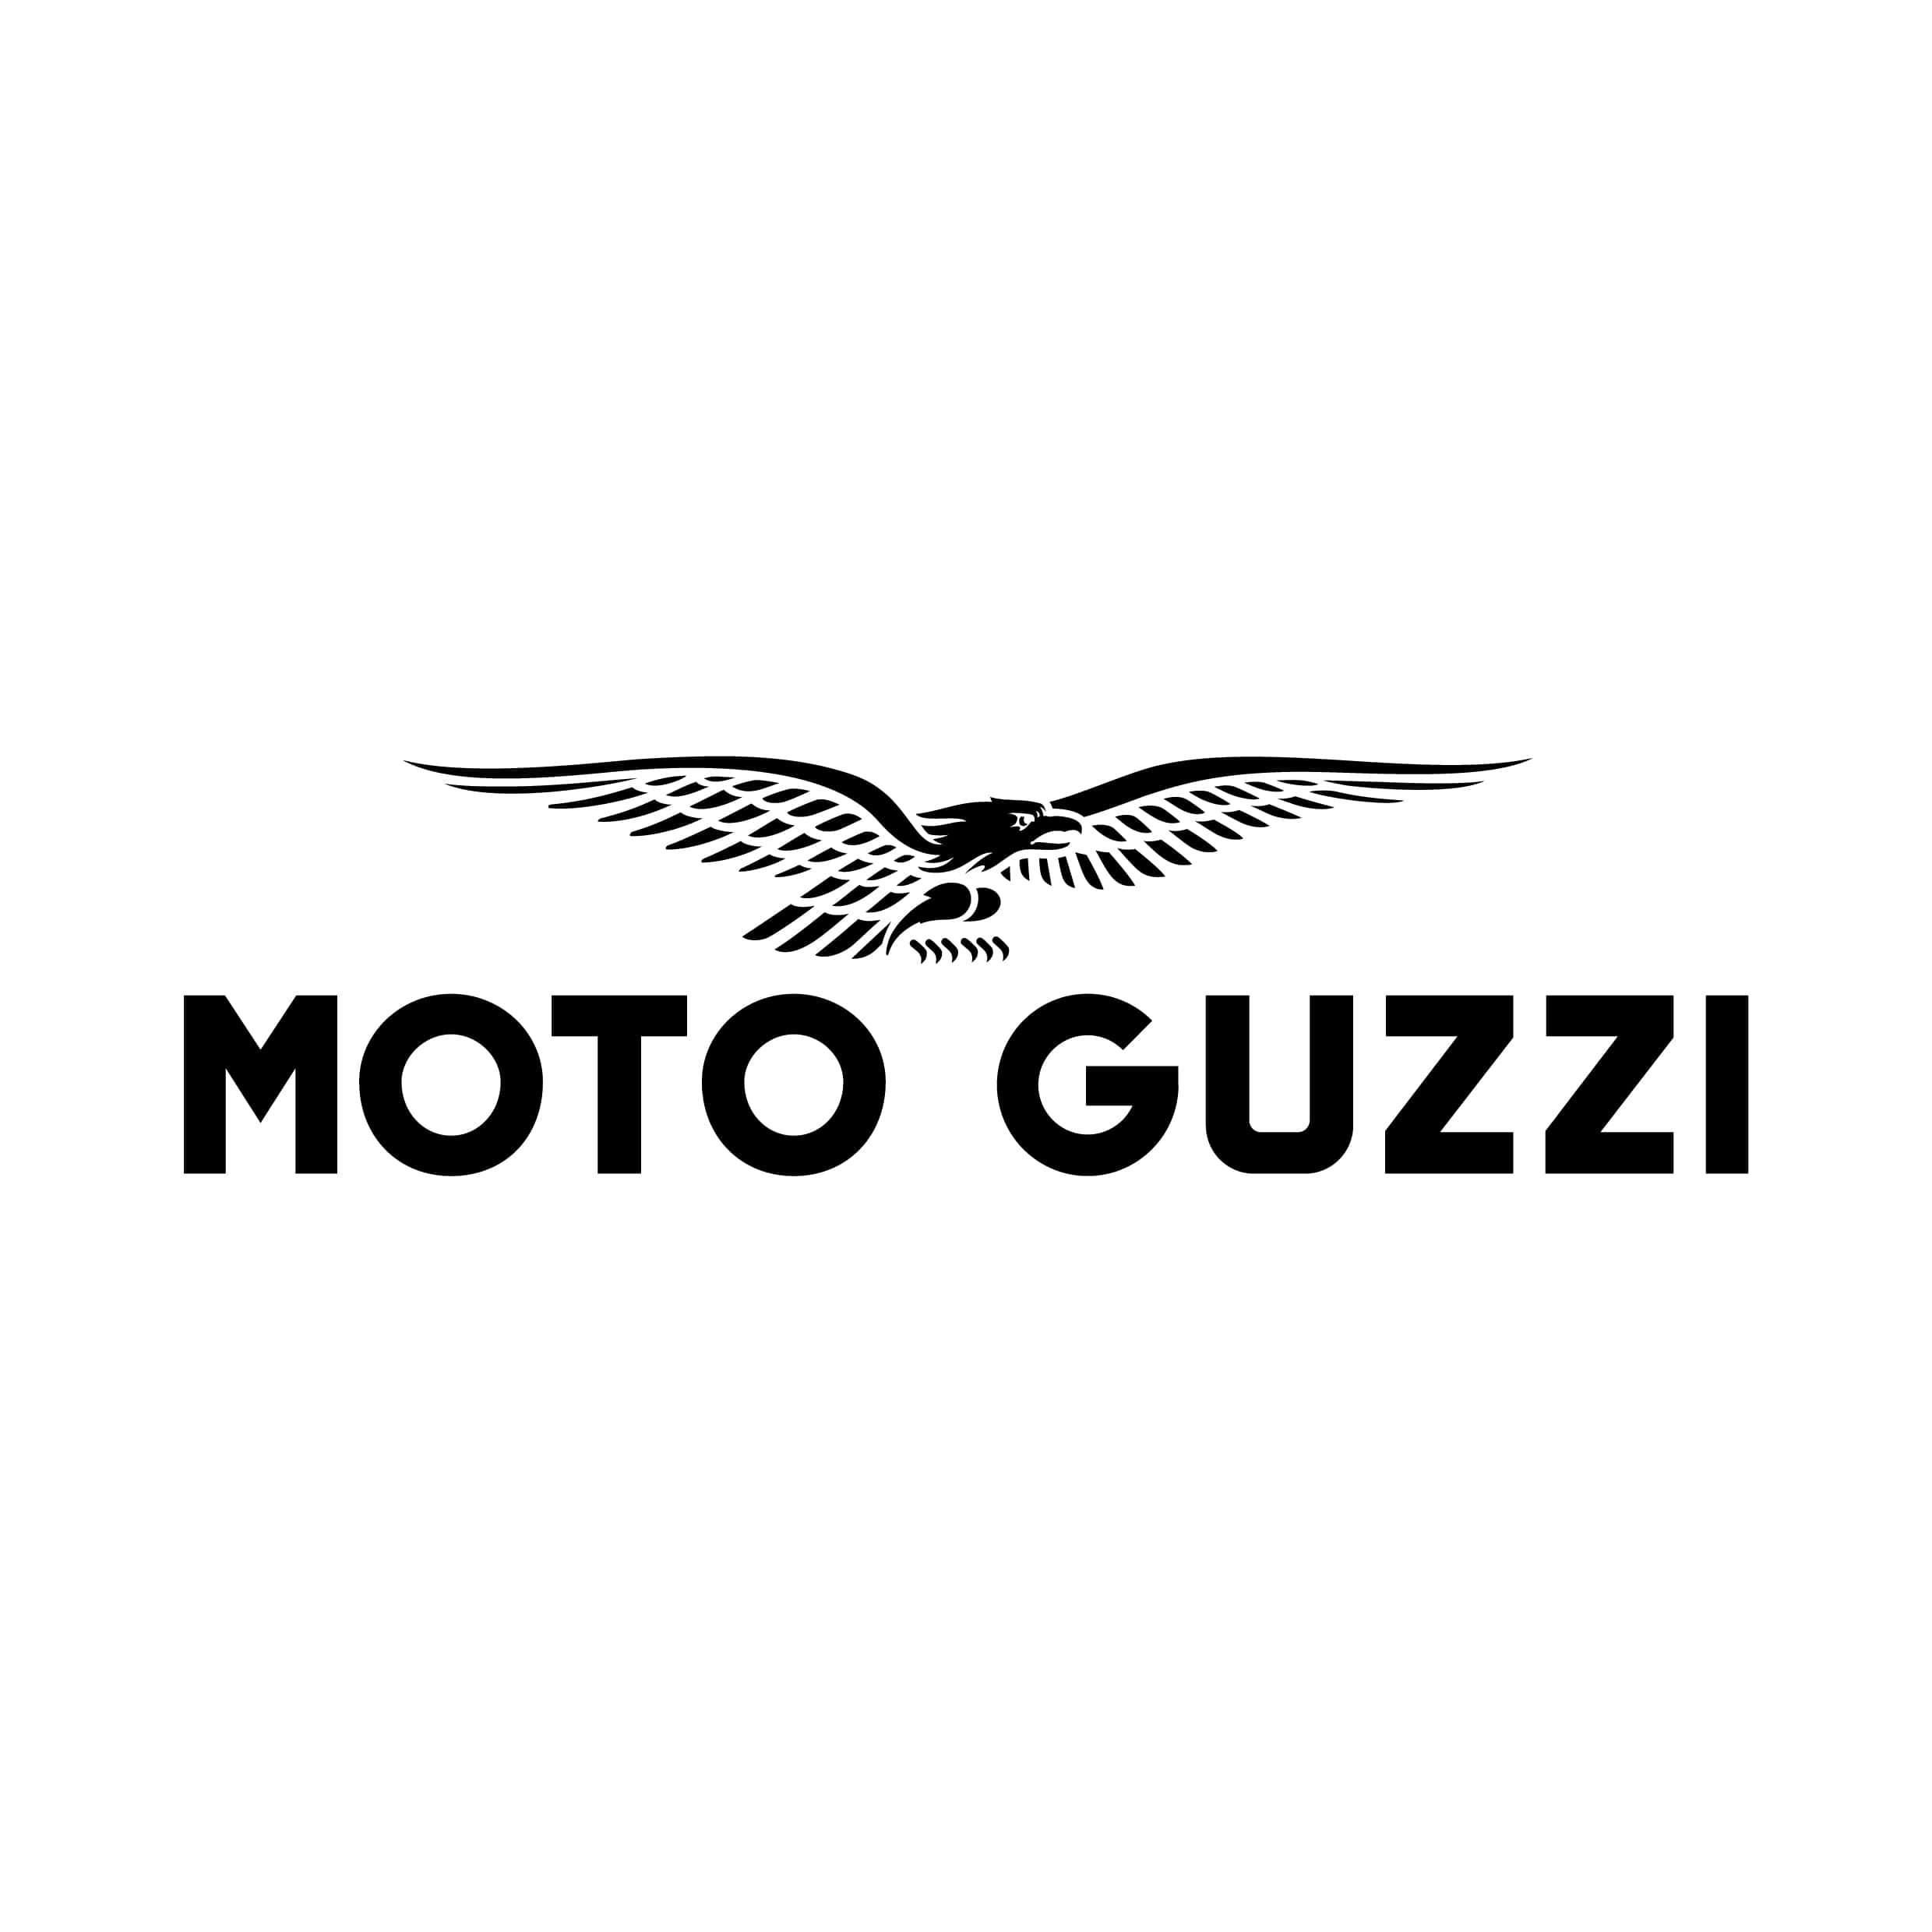 stickers-moto-guzzi-ref2-autocollant-moto-sticker-deux-roue-autocollants-decals-sponsors-tuning-sport-logo-bike-scooter-min